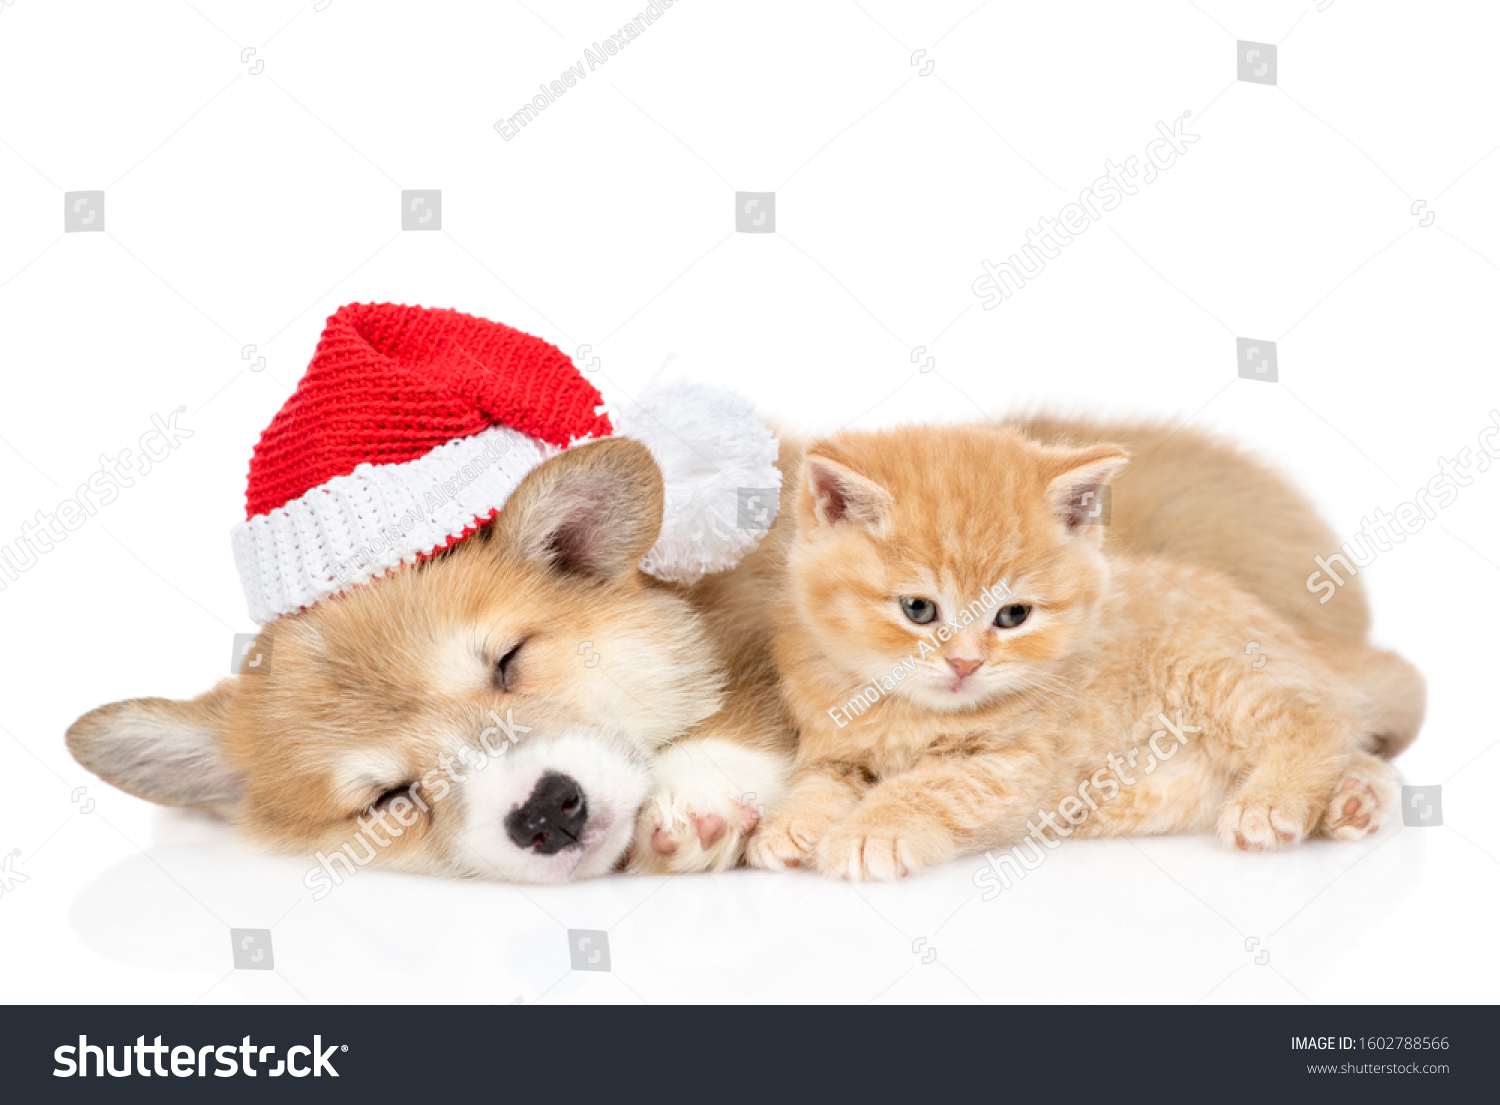 Corgi puppy wearing  acred christmas hat sleeps with tiny kitten. isolated on white background #1602788566